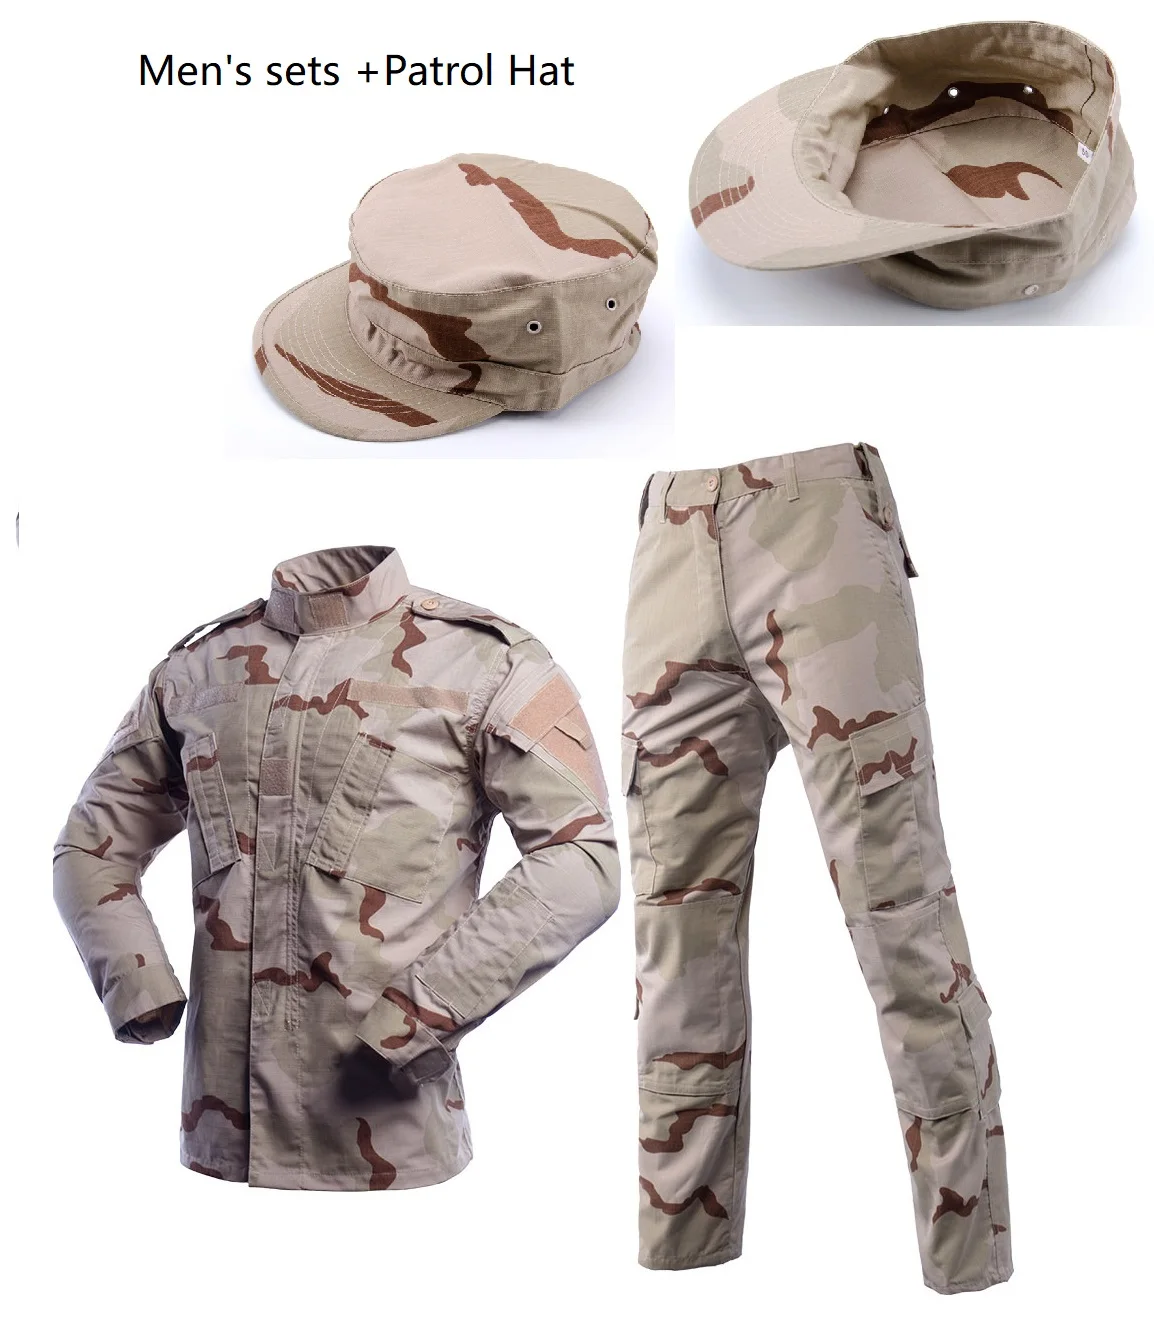 Men's Sets 3-color Desert Camouflage ACU Military Uiforms With Patrol Hat